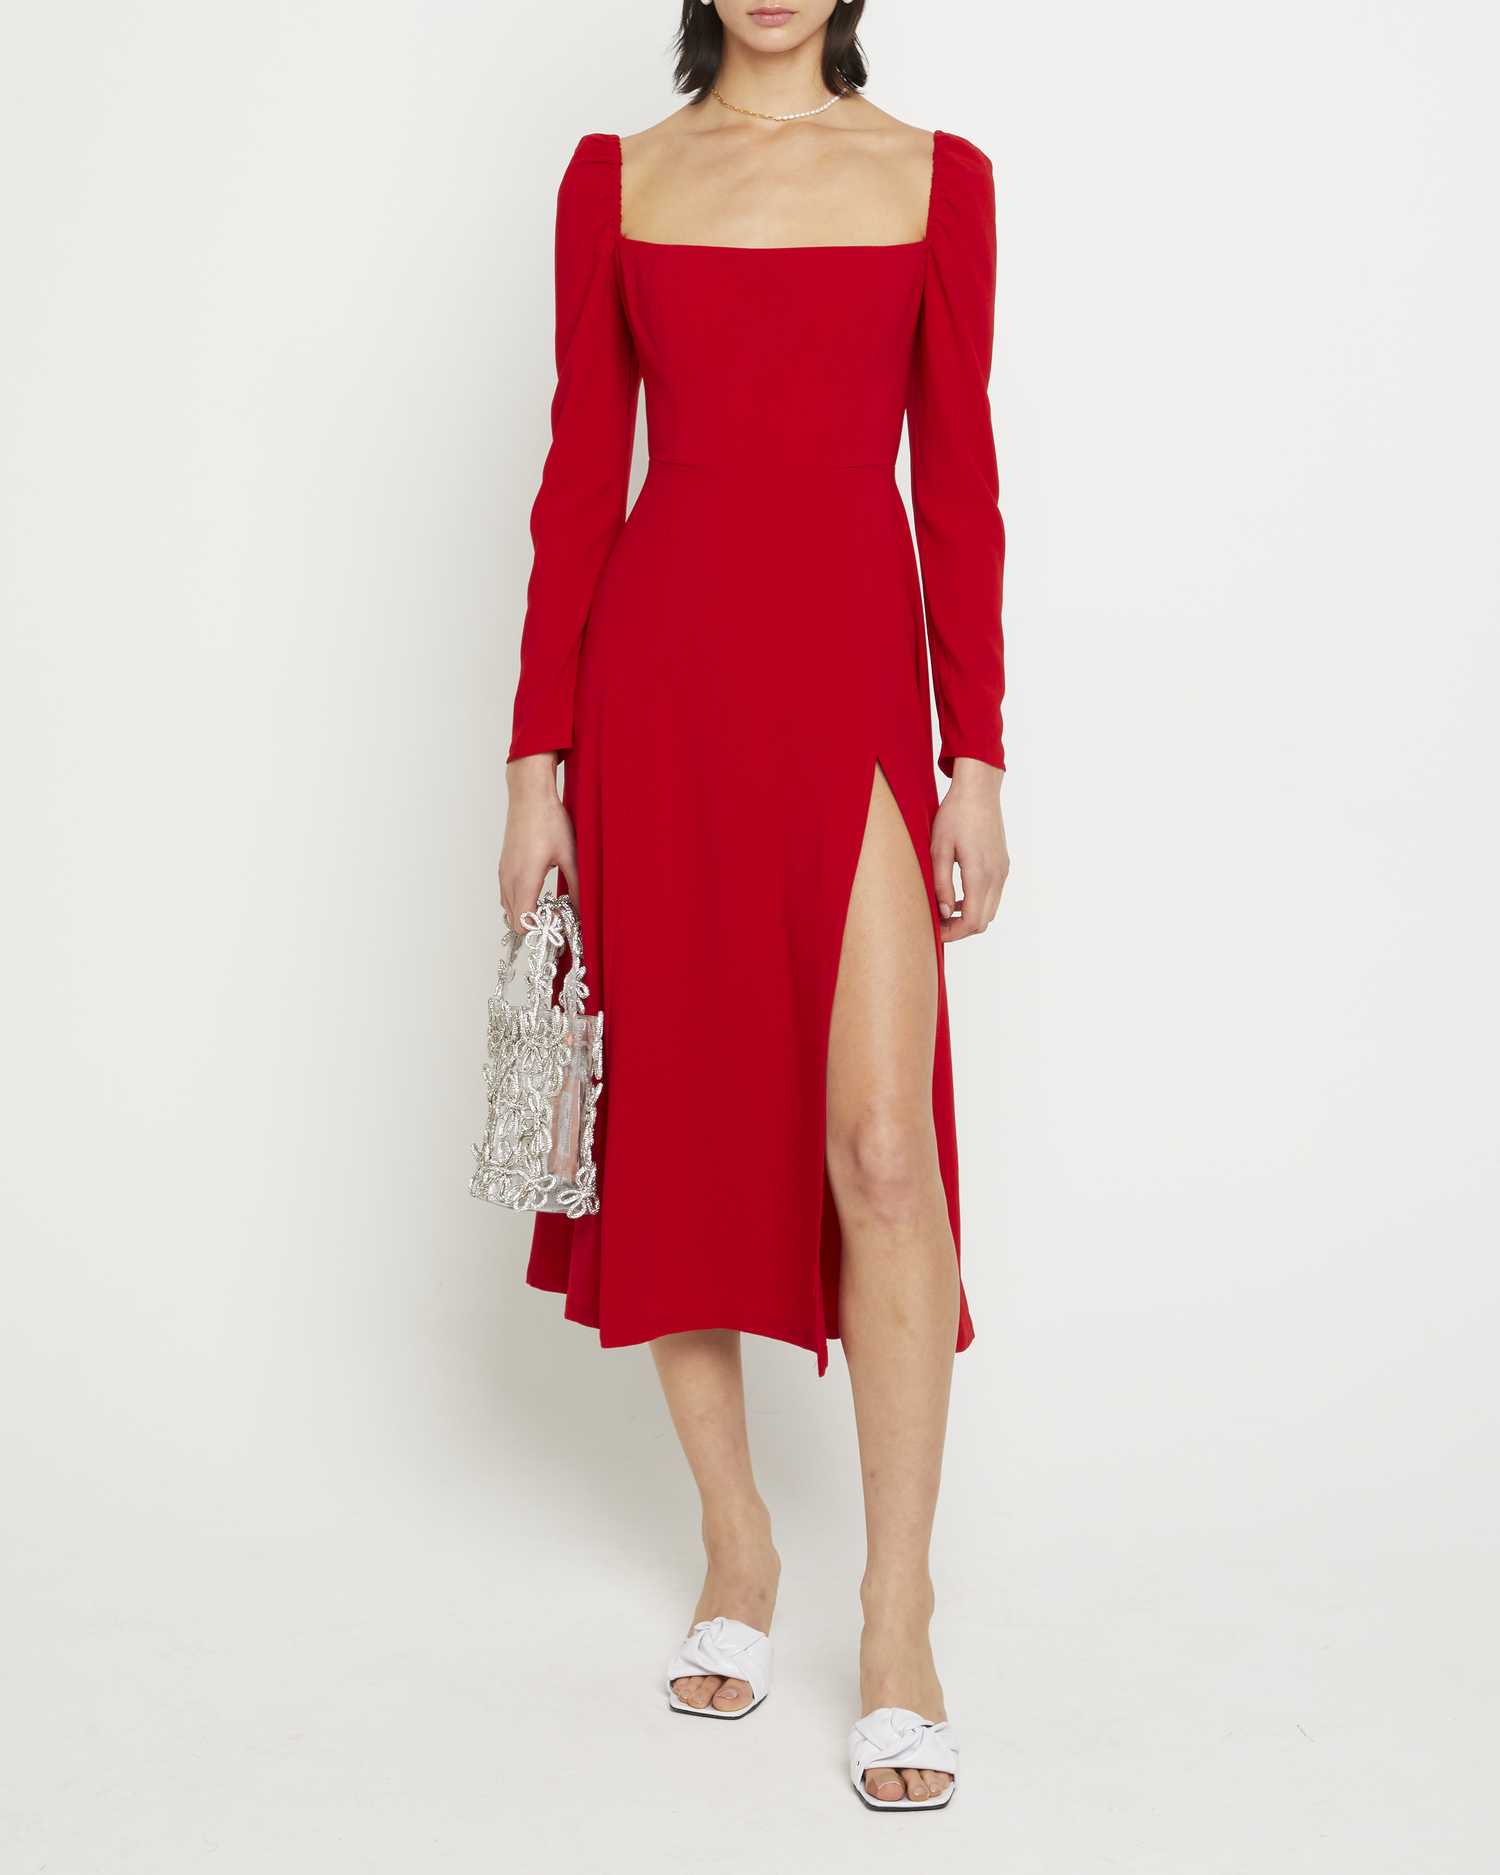 First image of Lenon Dress, a red midi dress, side skirt slit, long sleeves, square neckline